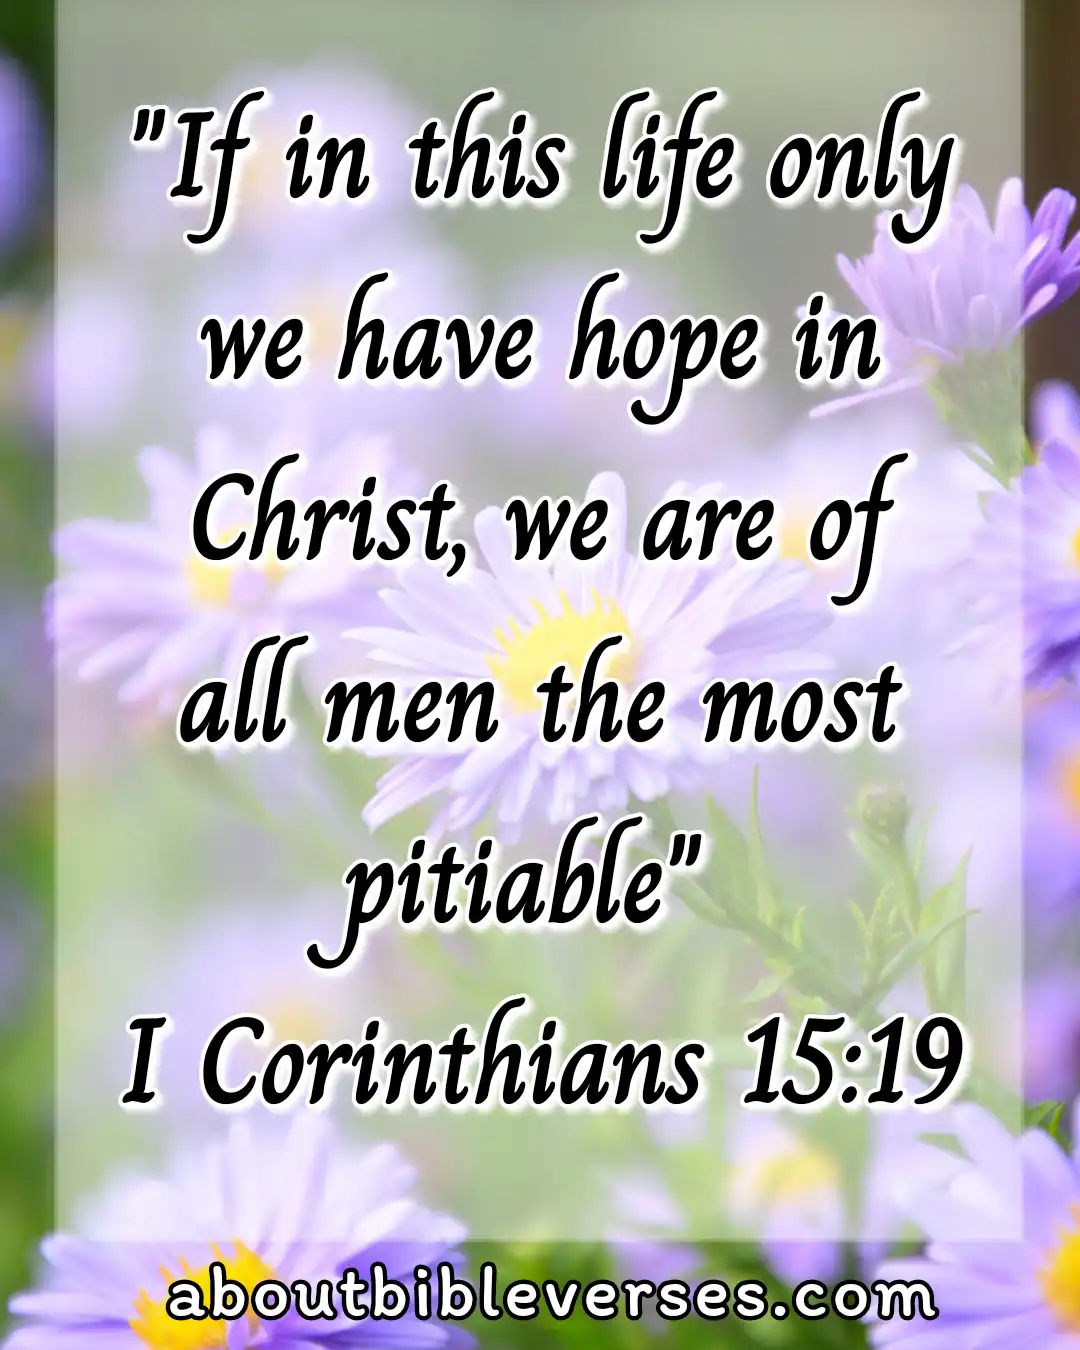 today bible verse (1 Corinthians 15:19)